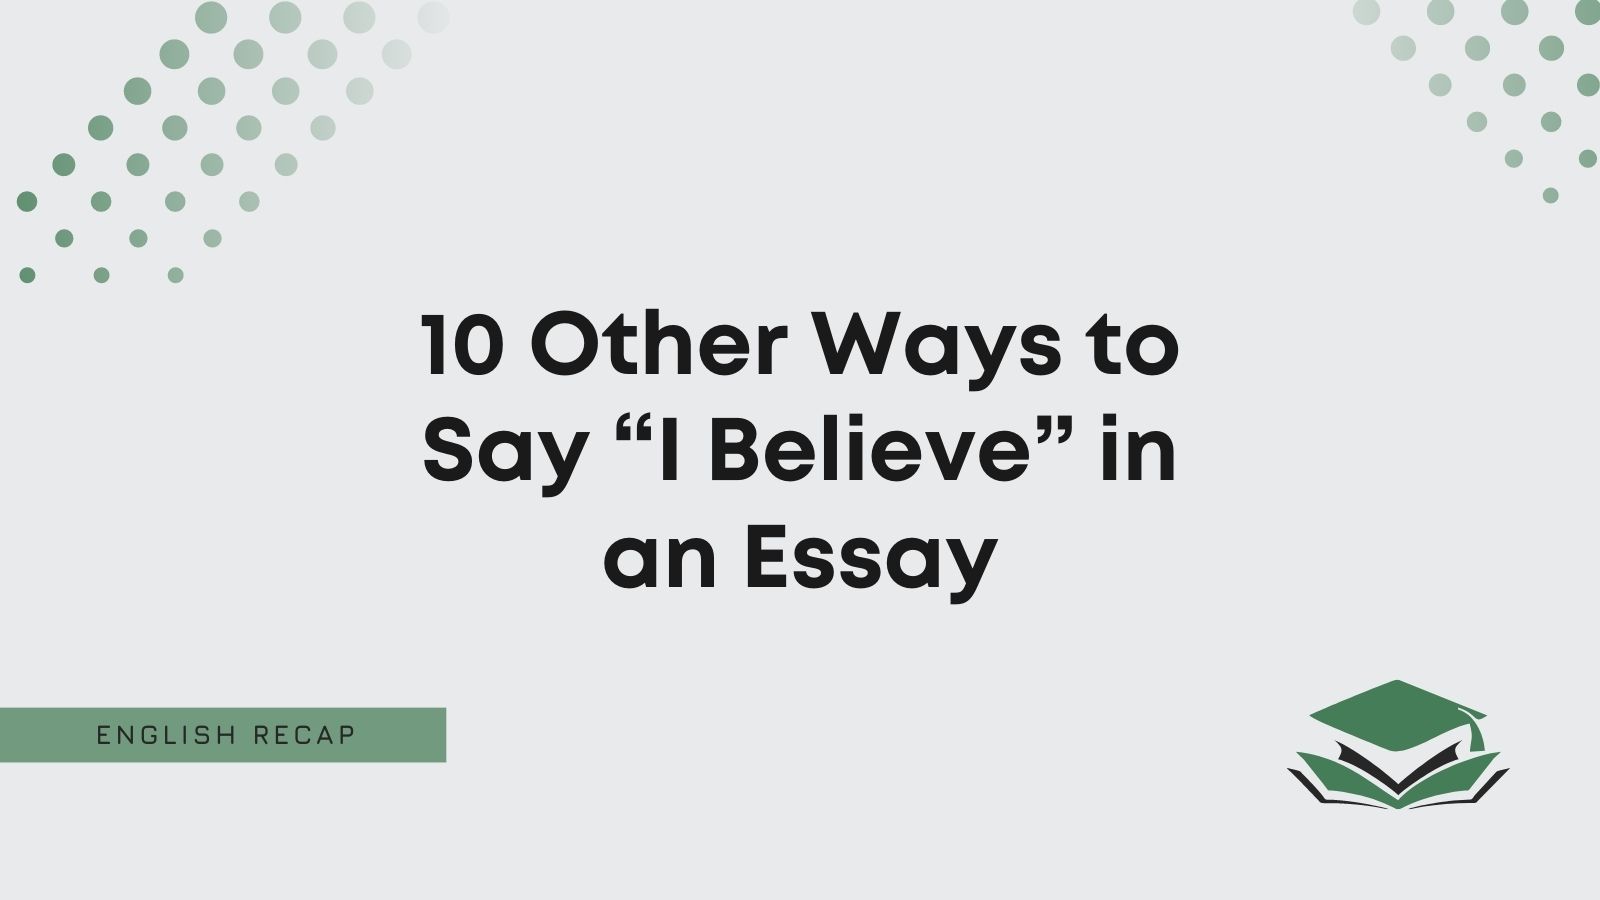 i believe synonyms essay